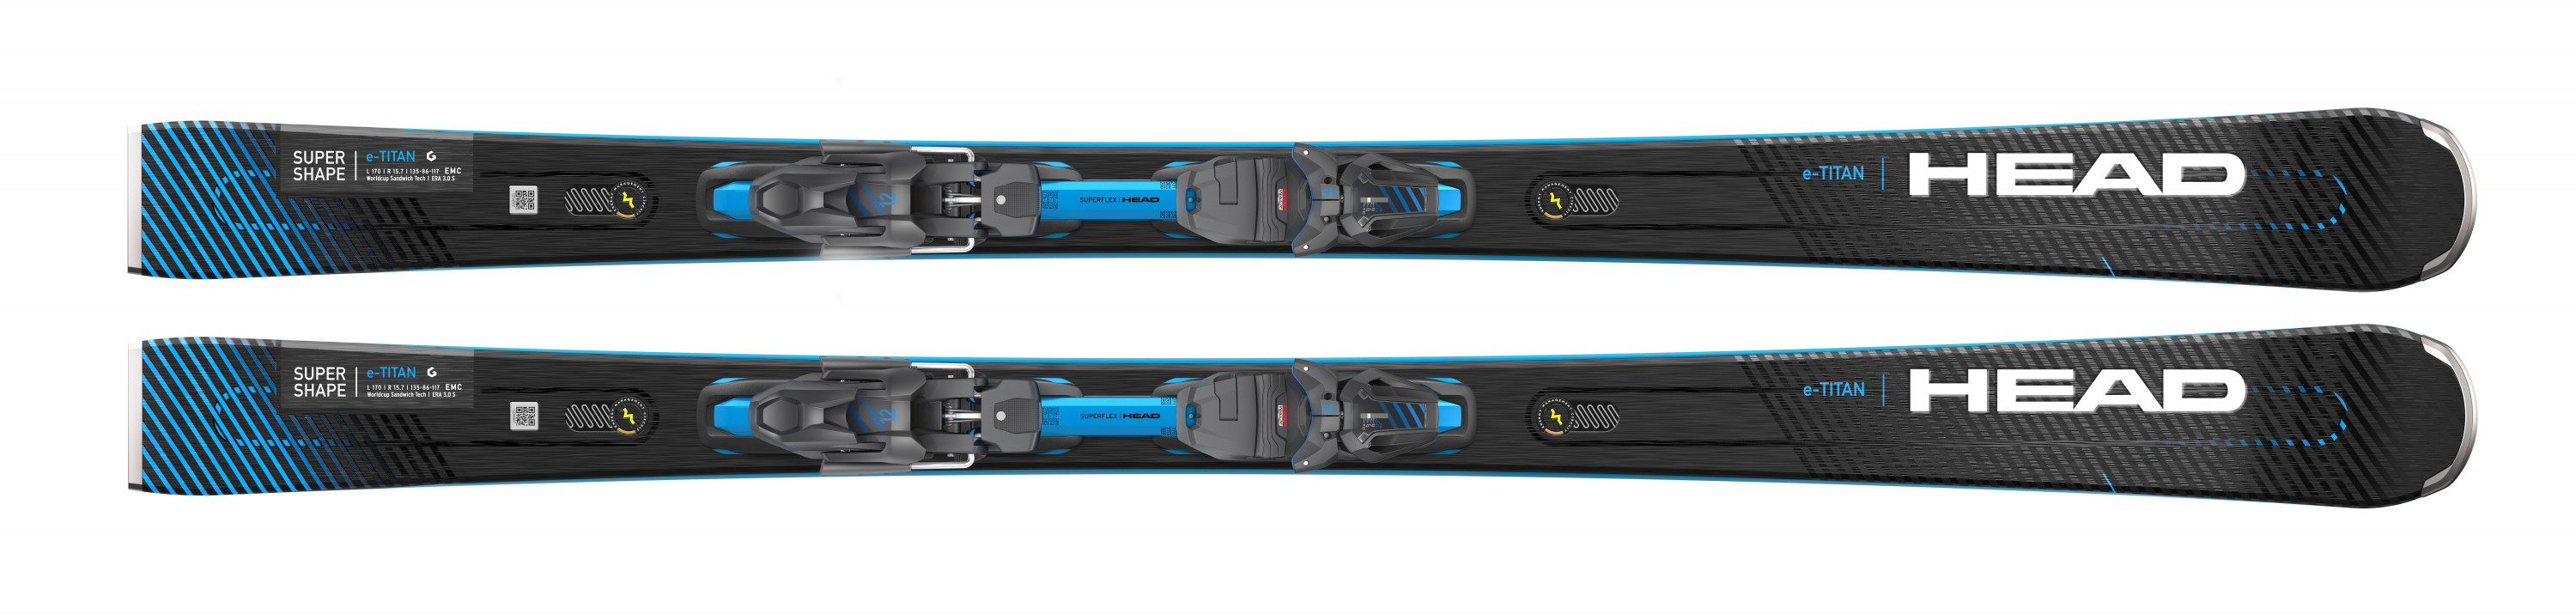 Горные лыжи HEAD Supershape e-Titan SF-PR+ креп. PRD 12 GW 